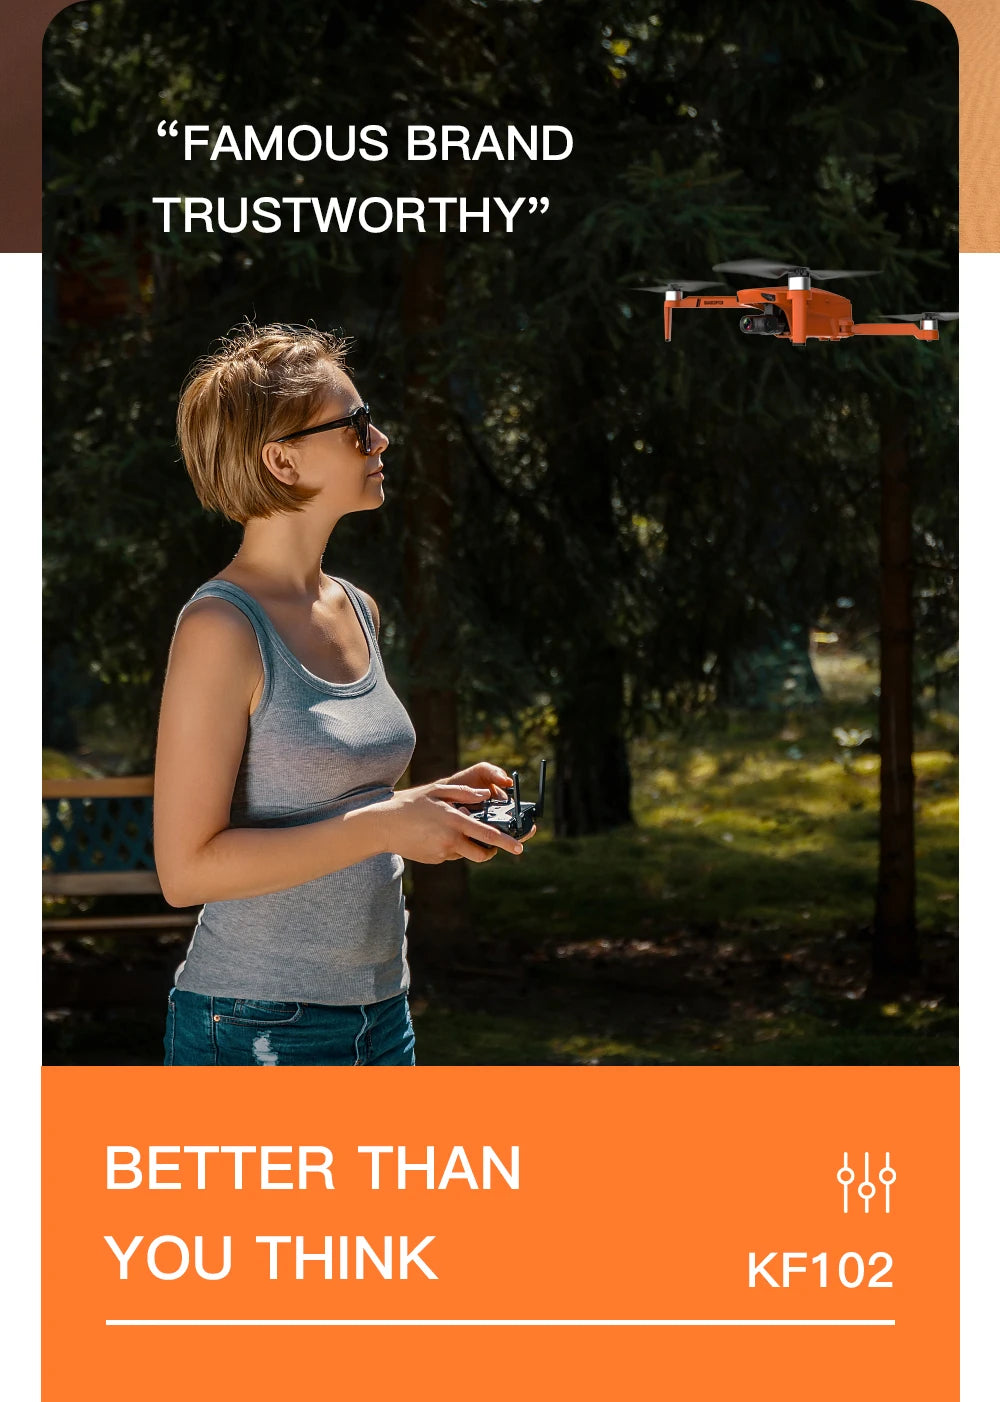 2023 New GPS Drone, KFAMOUS BRAND TRUSTWORTHY" K